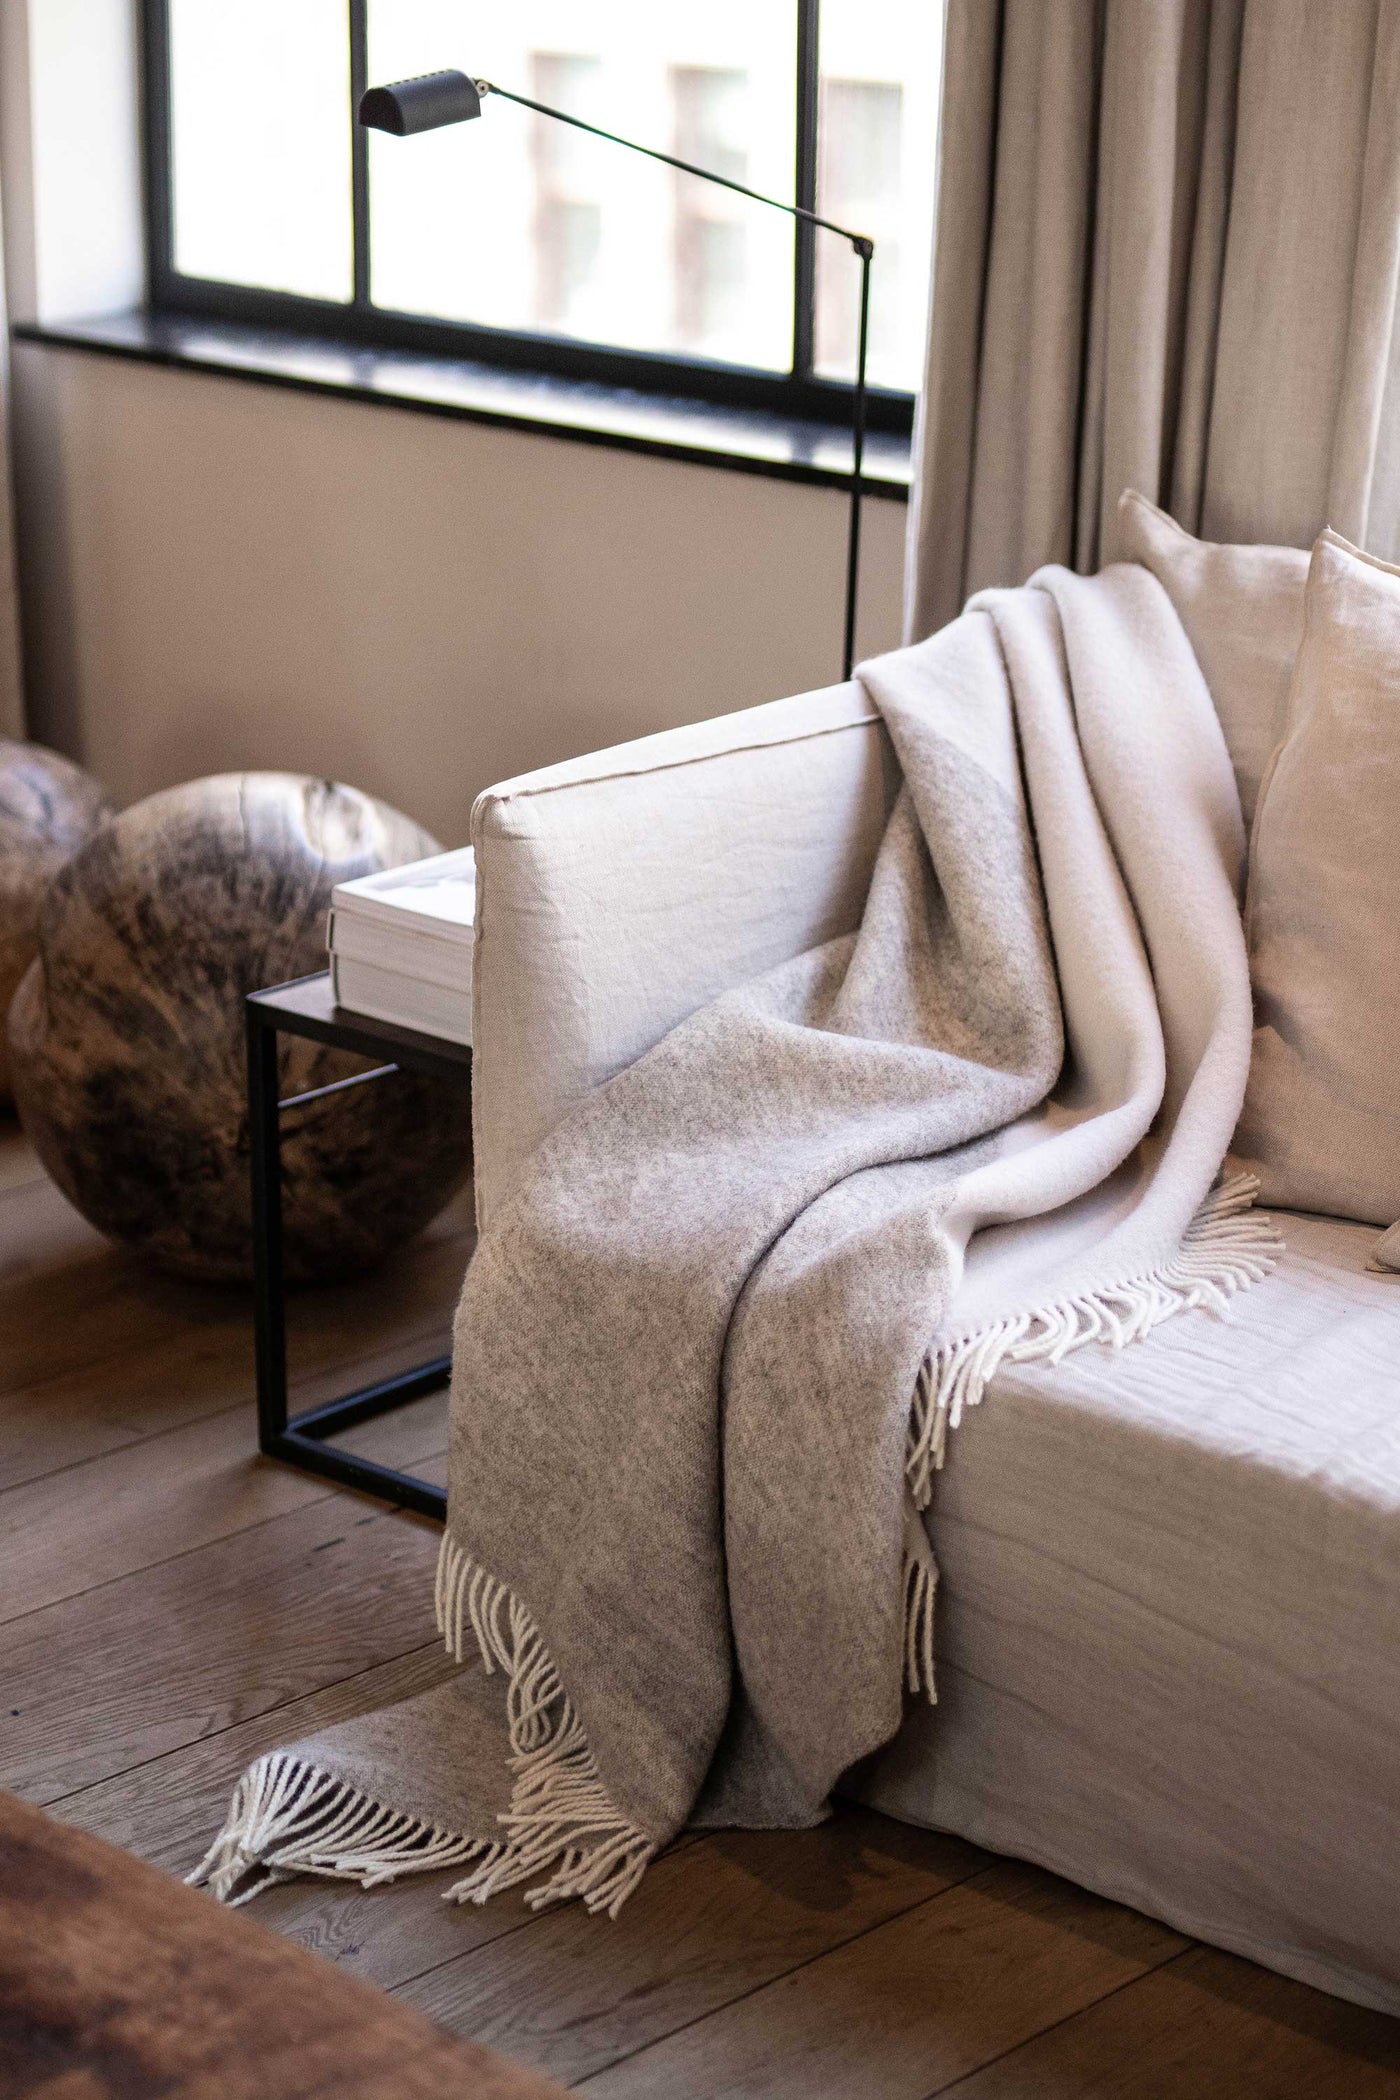 Keep Warm - How To Create A Cozy Interior Blog | Enter The Loft